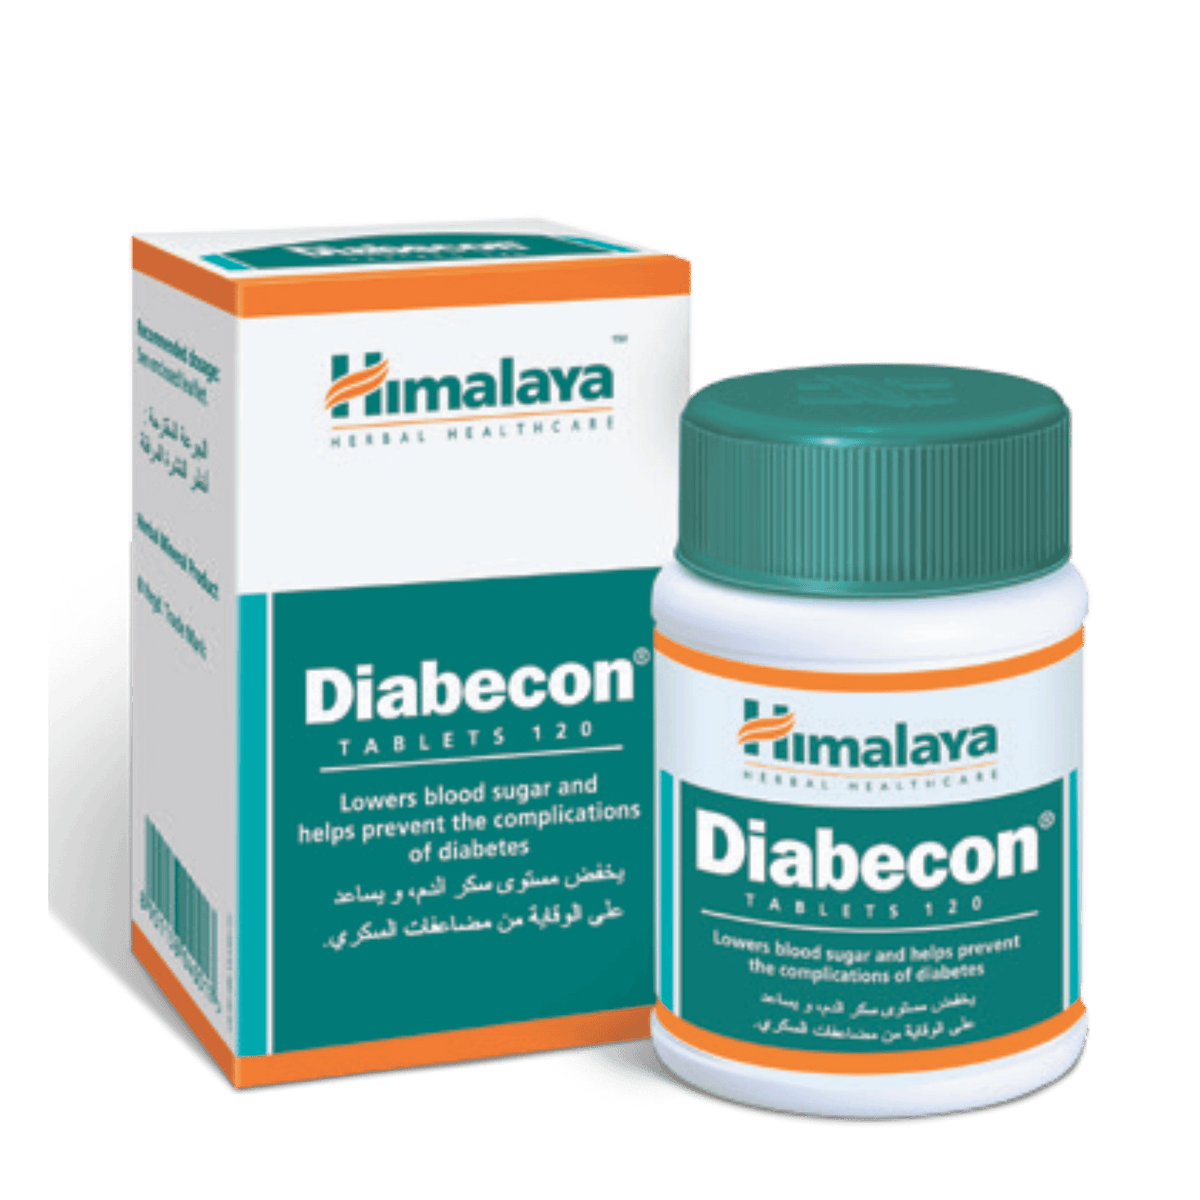 himalaya diabecon side effects